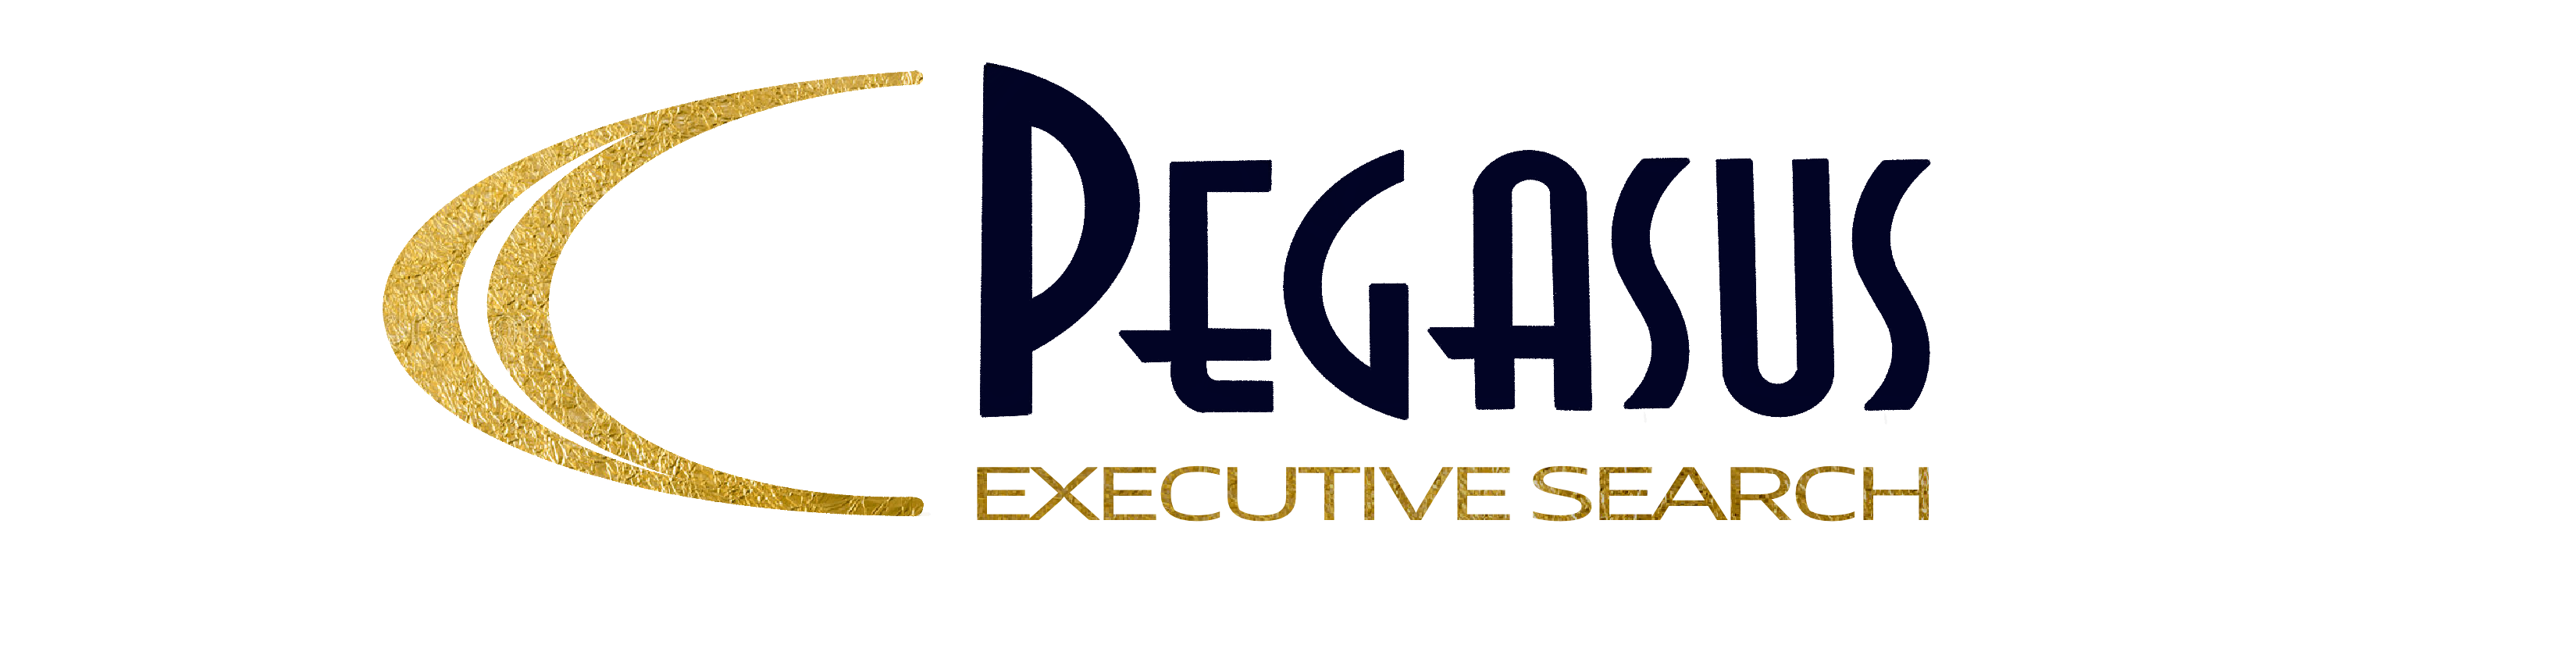 Pegasus Executive Search